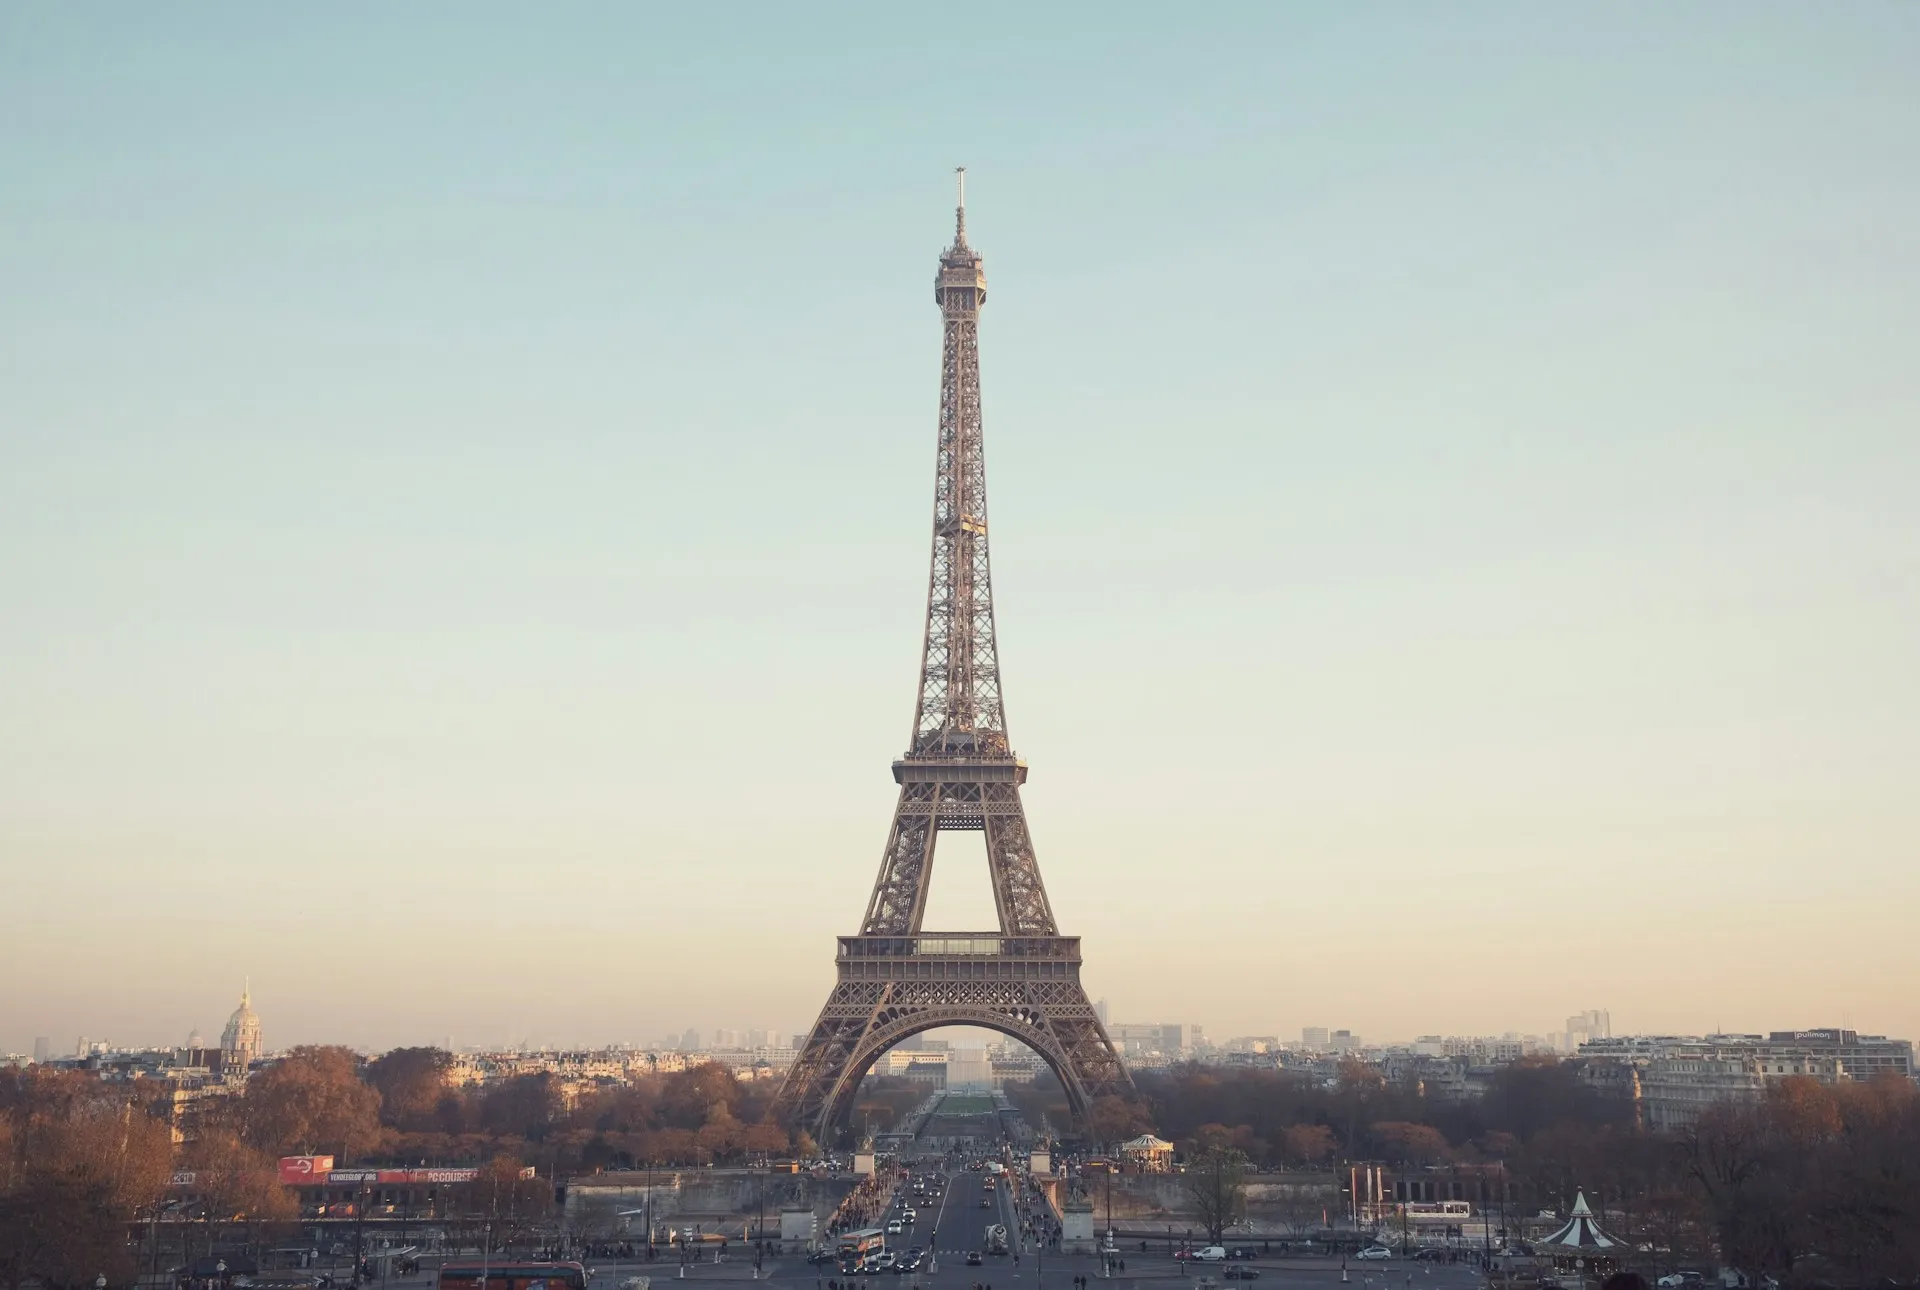 Eiffel Tower. Source: Photo by Jad Limcaco on Unsplash